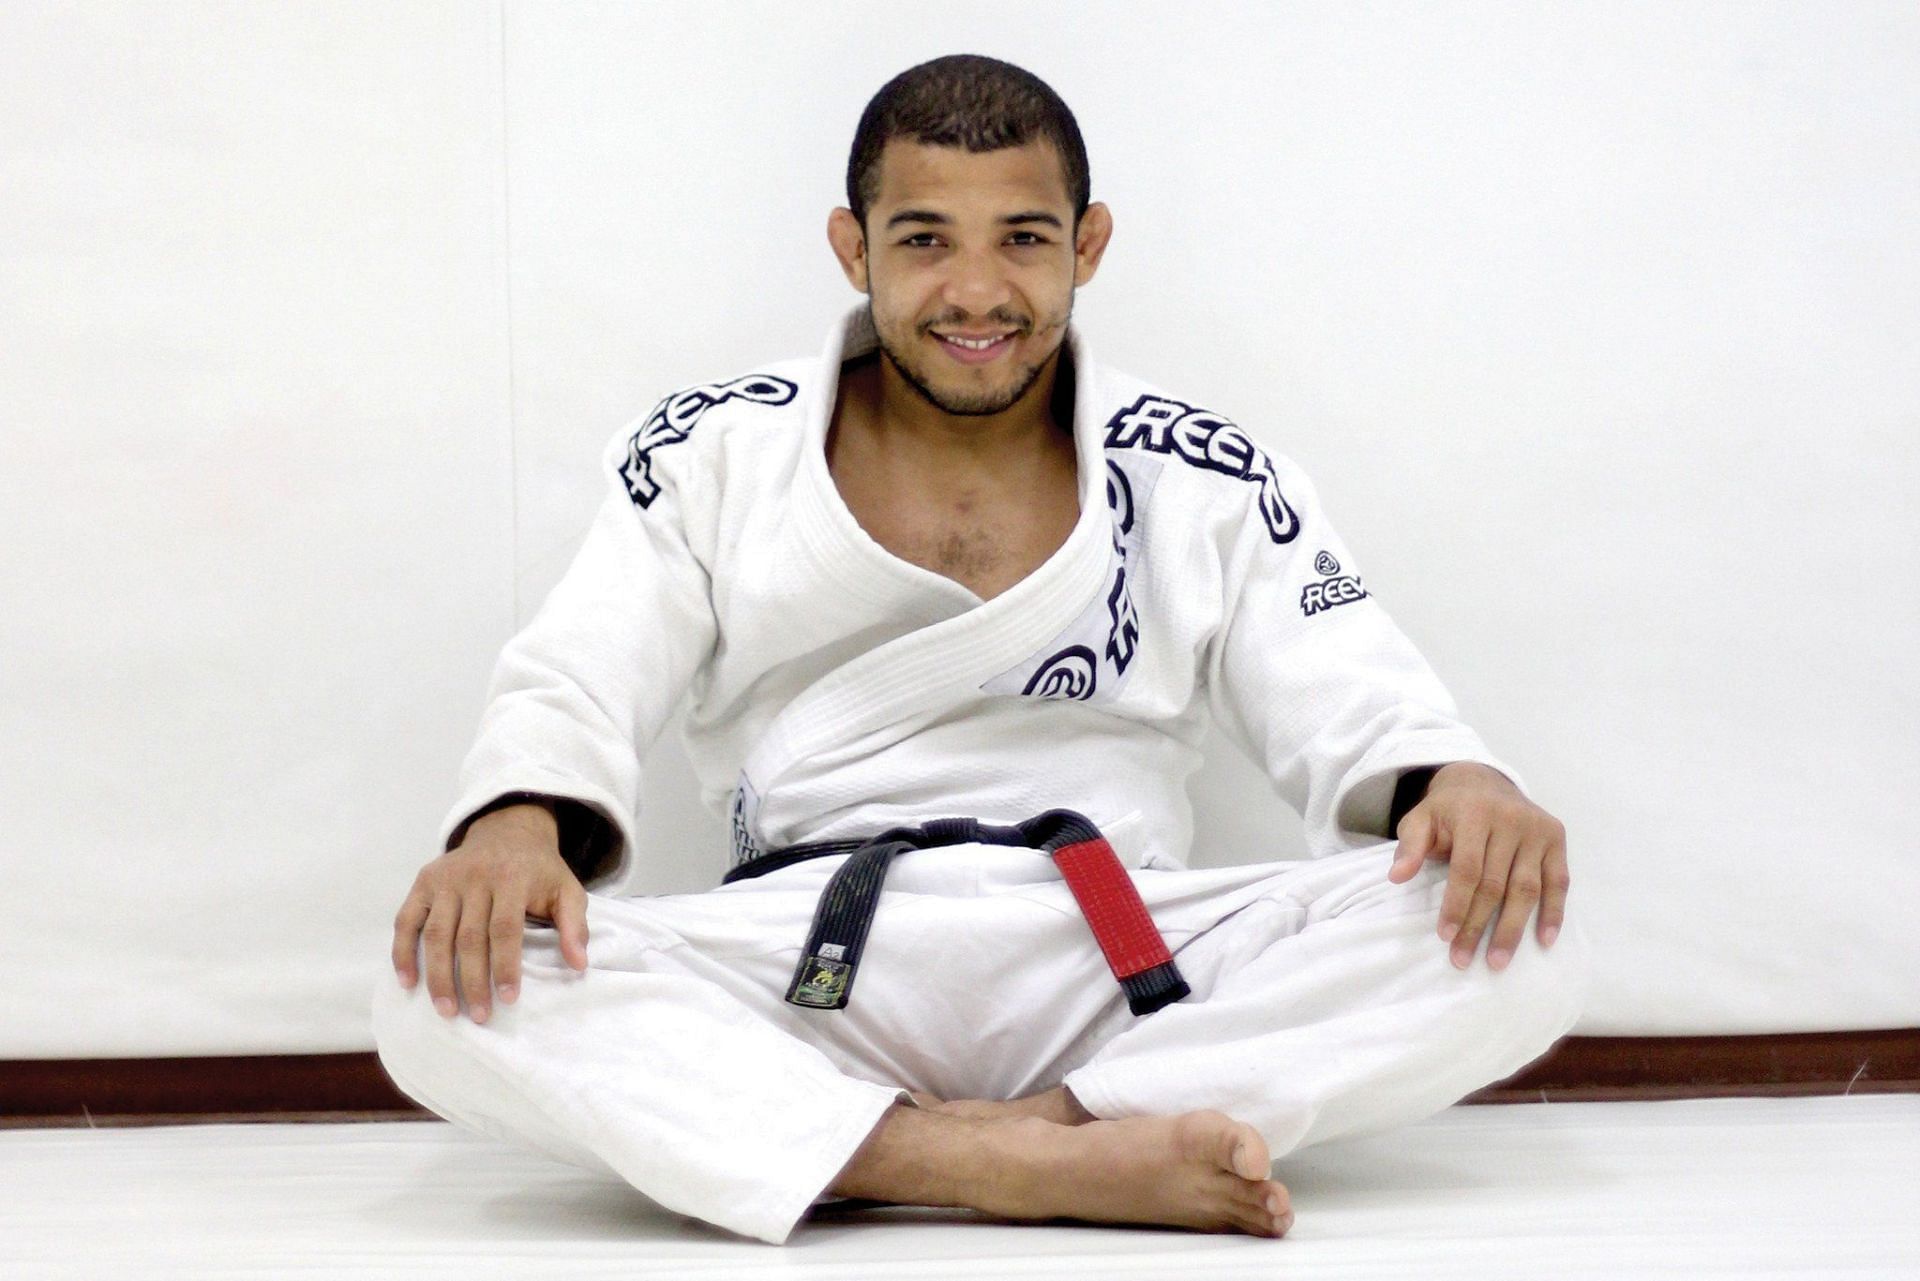 Jose Aldo poses in a jiu-jitsu gi